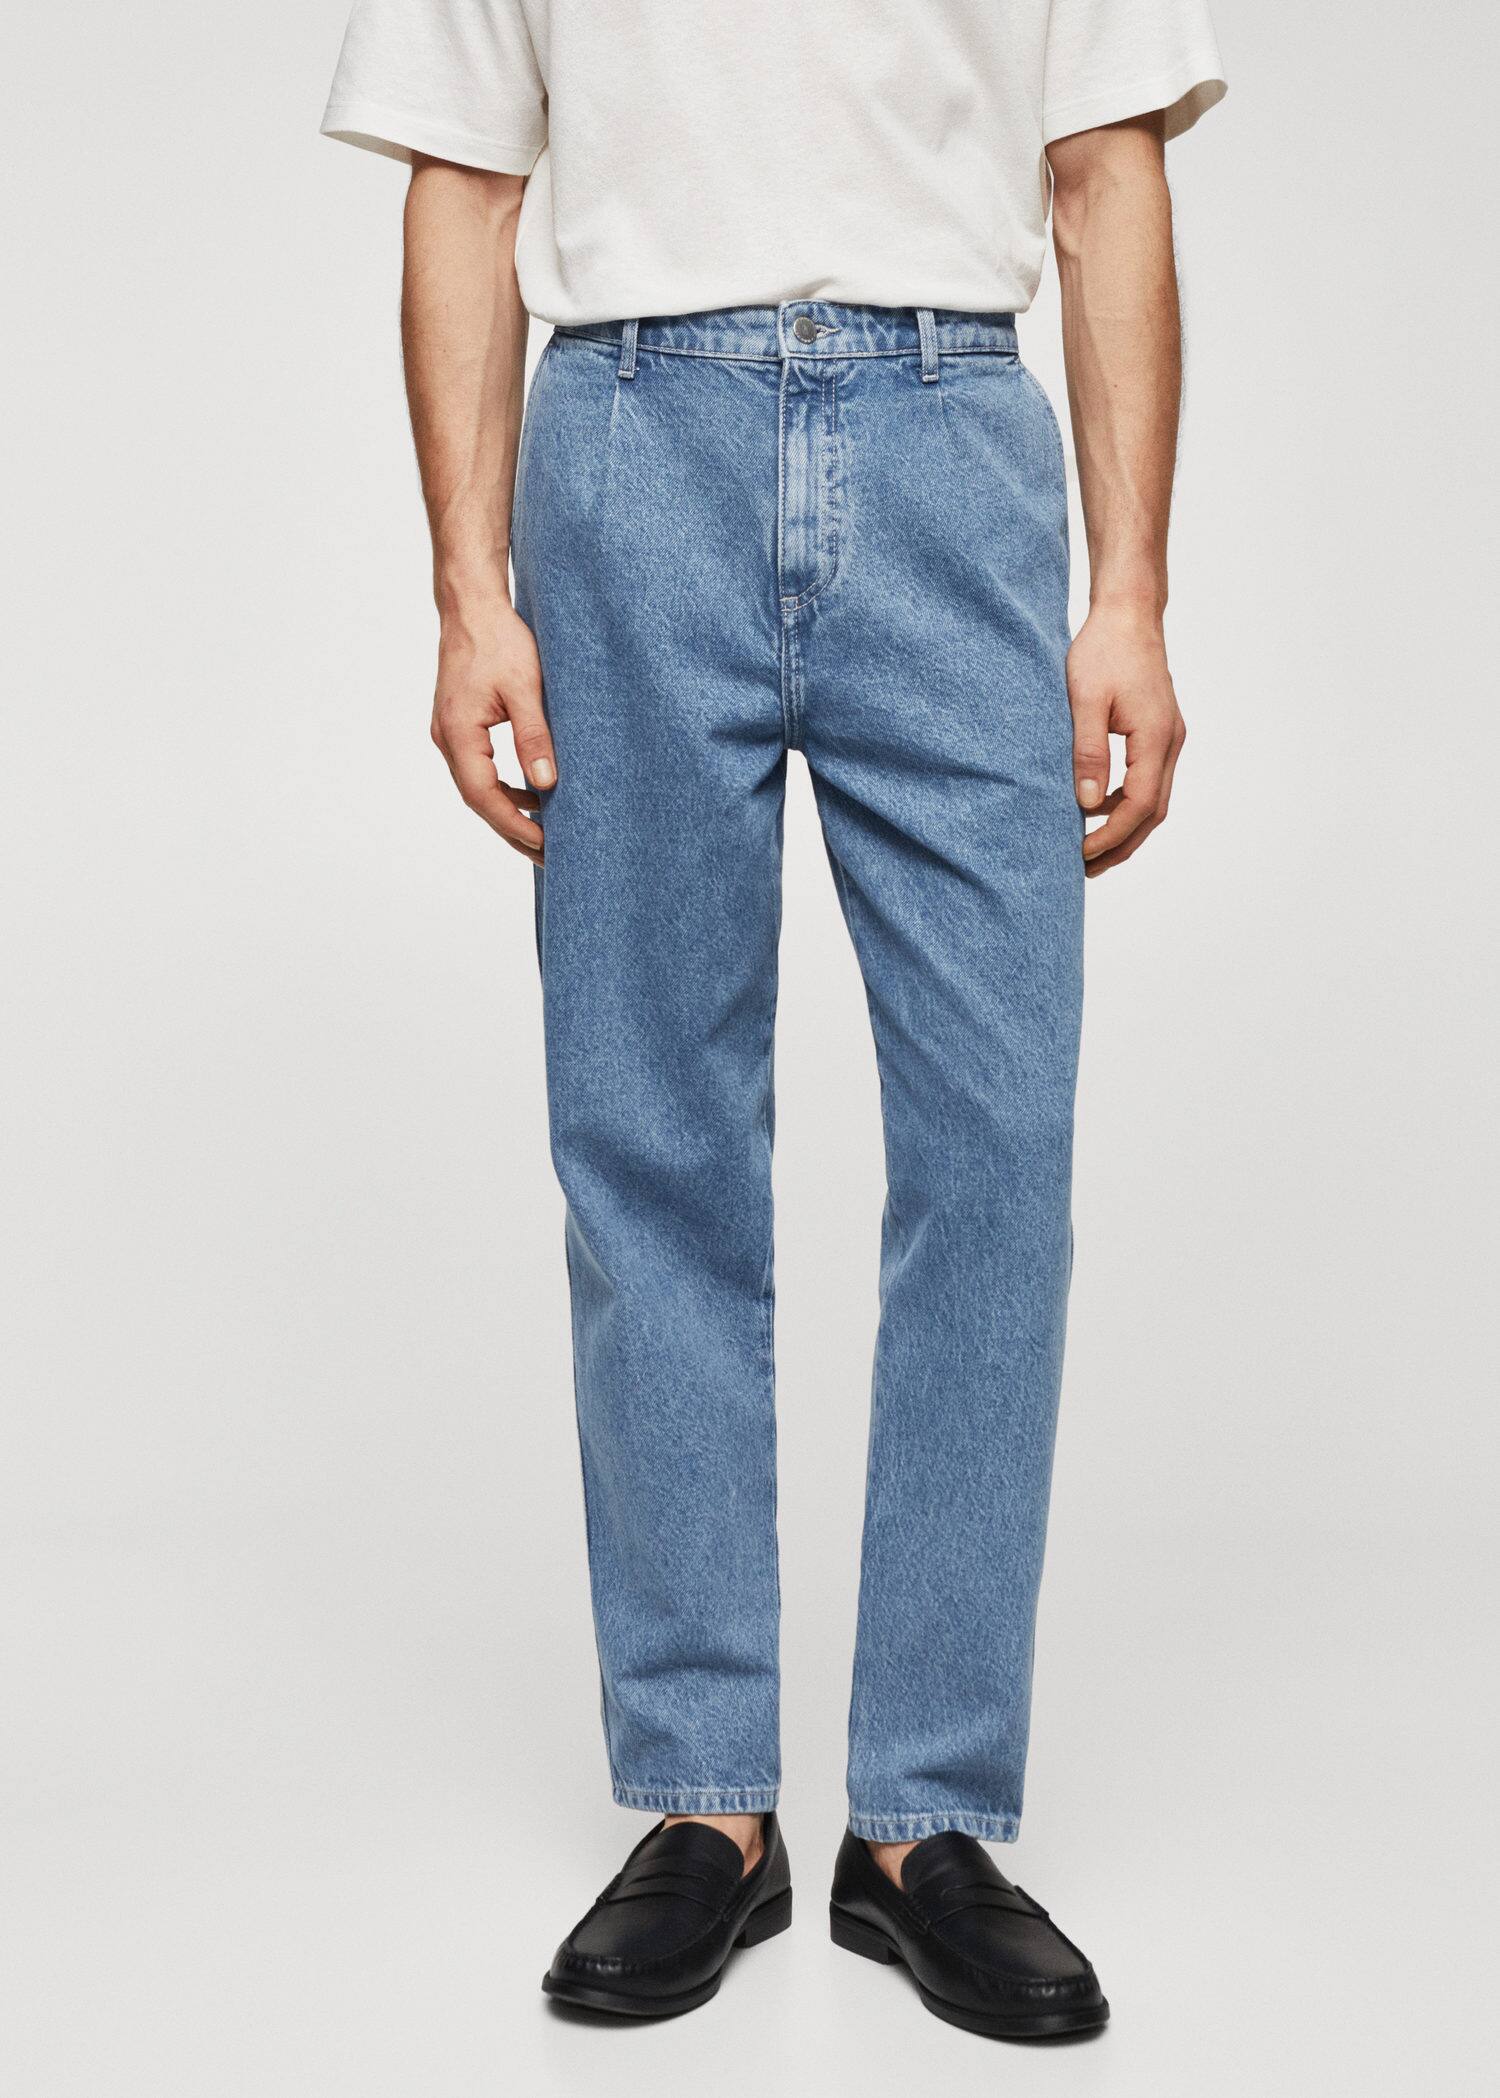 Dart slouchy jeans - Medium plane